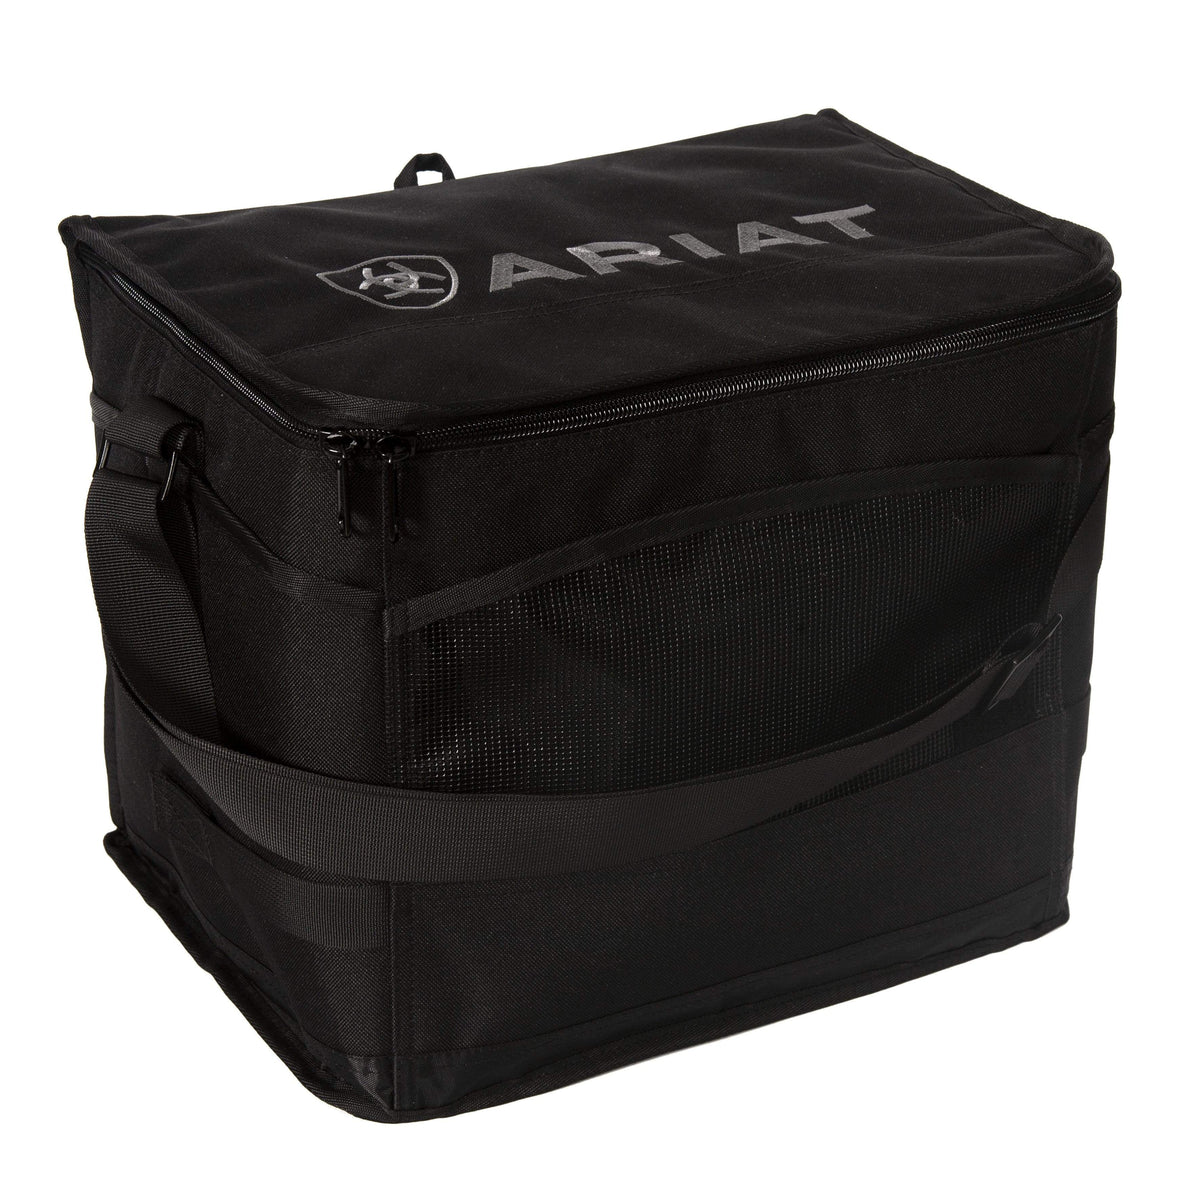 ARIAT BAGS WALLETS BLACK/GREY Ariat Cooler Bag